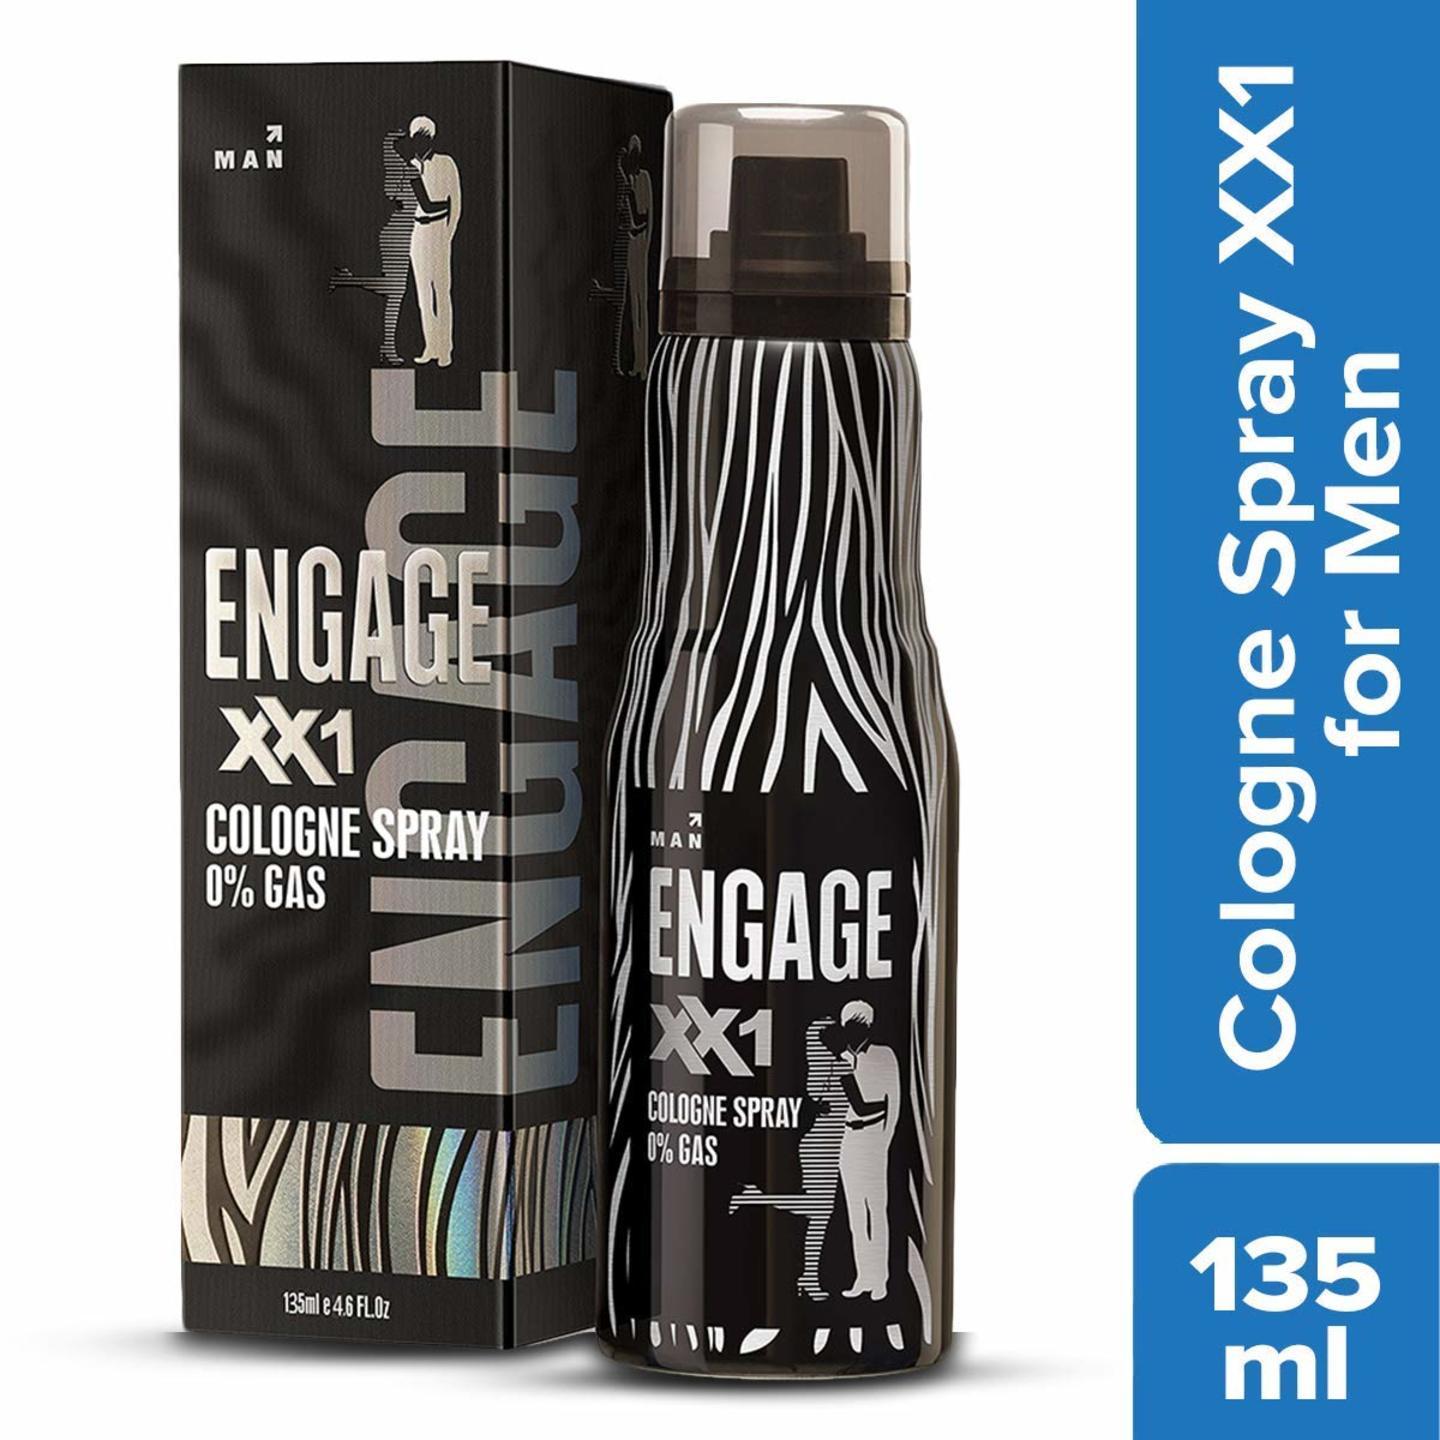 Engage XX1 Cologne No Gas Perfume for Men 135ml  InnerMan